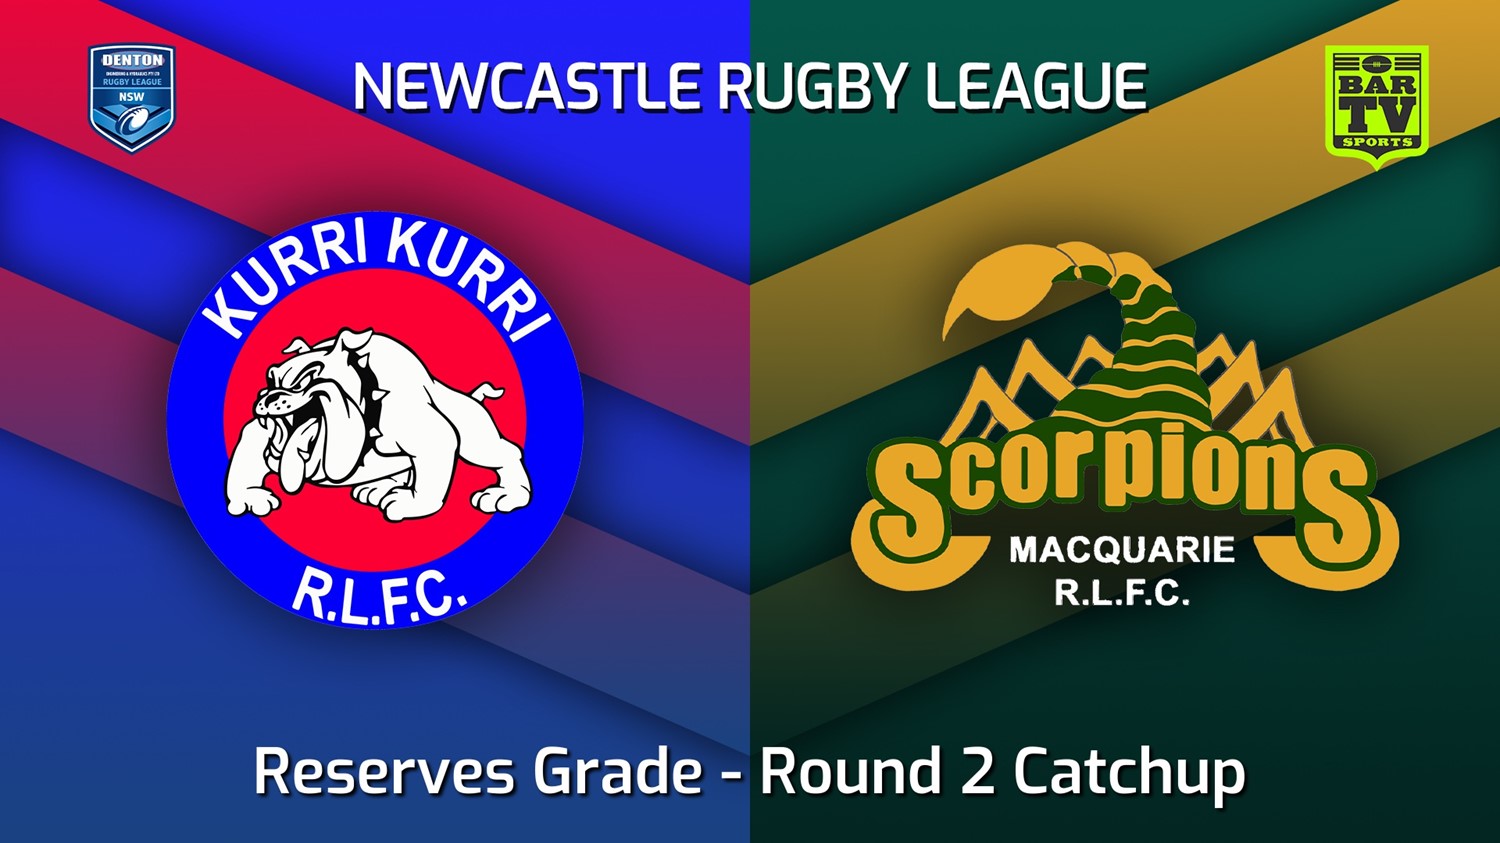 220515-Newcastle Round 2 Catchup - Reserves Grade - Kurri Kurri Bulldogs v Macquarie Scorpions Slate Image